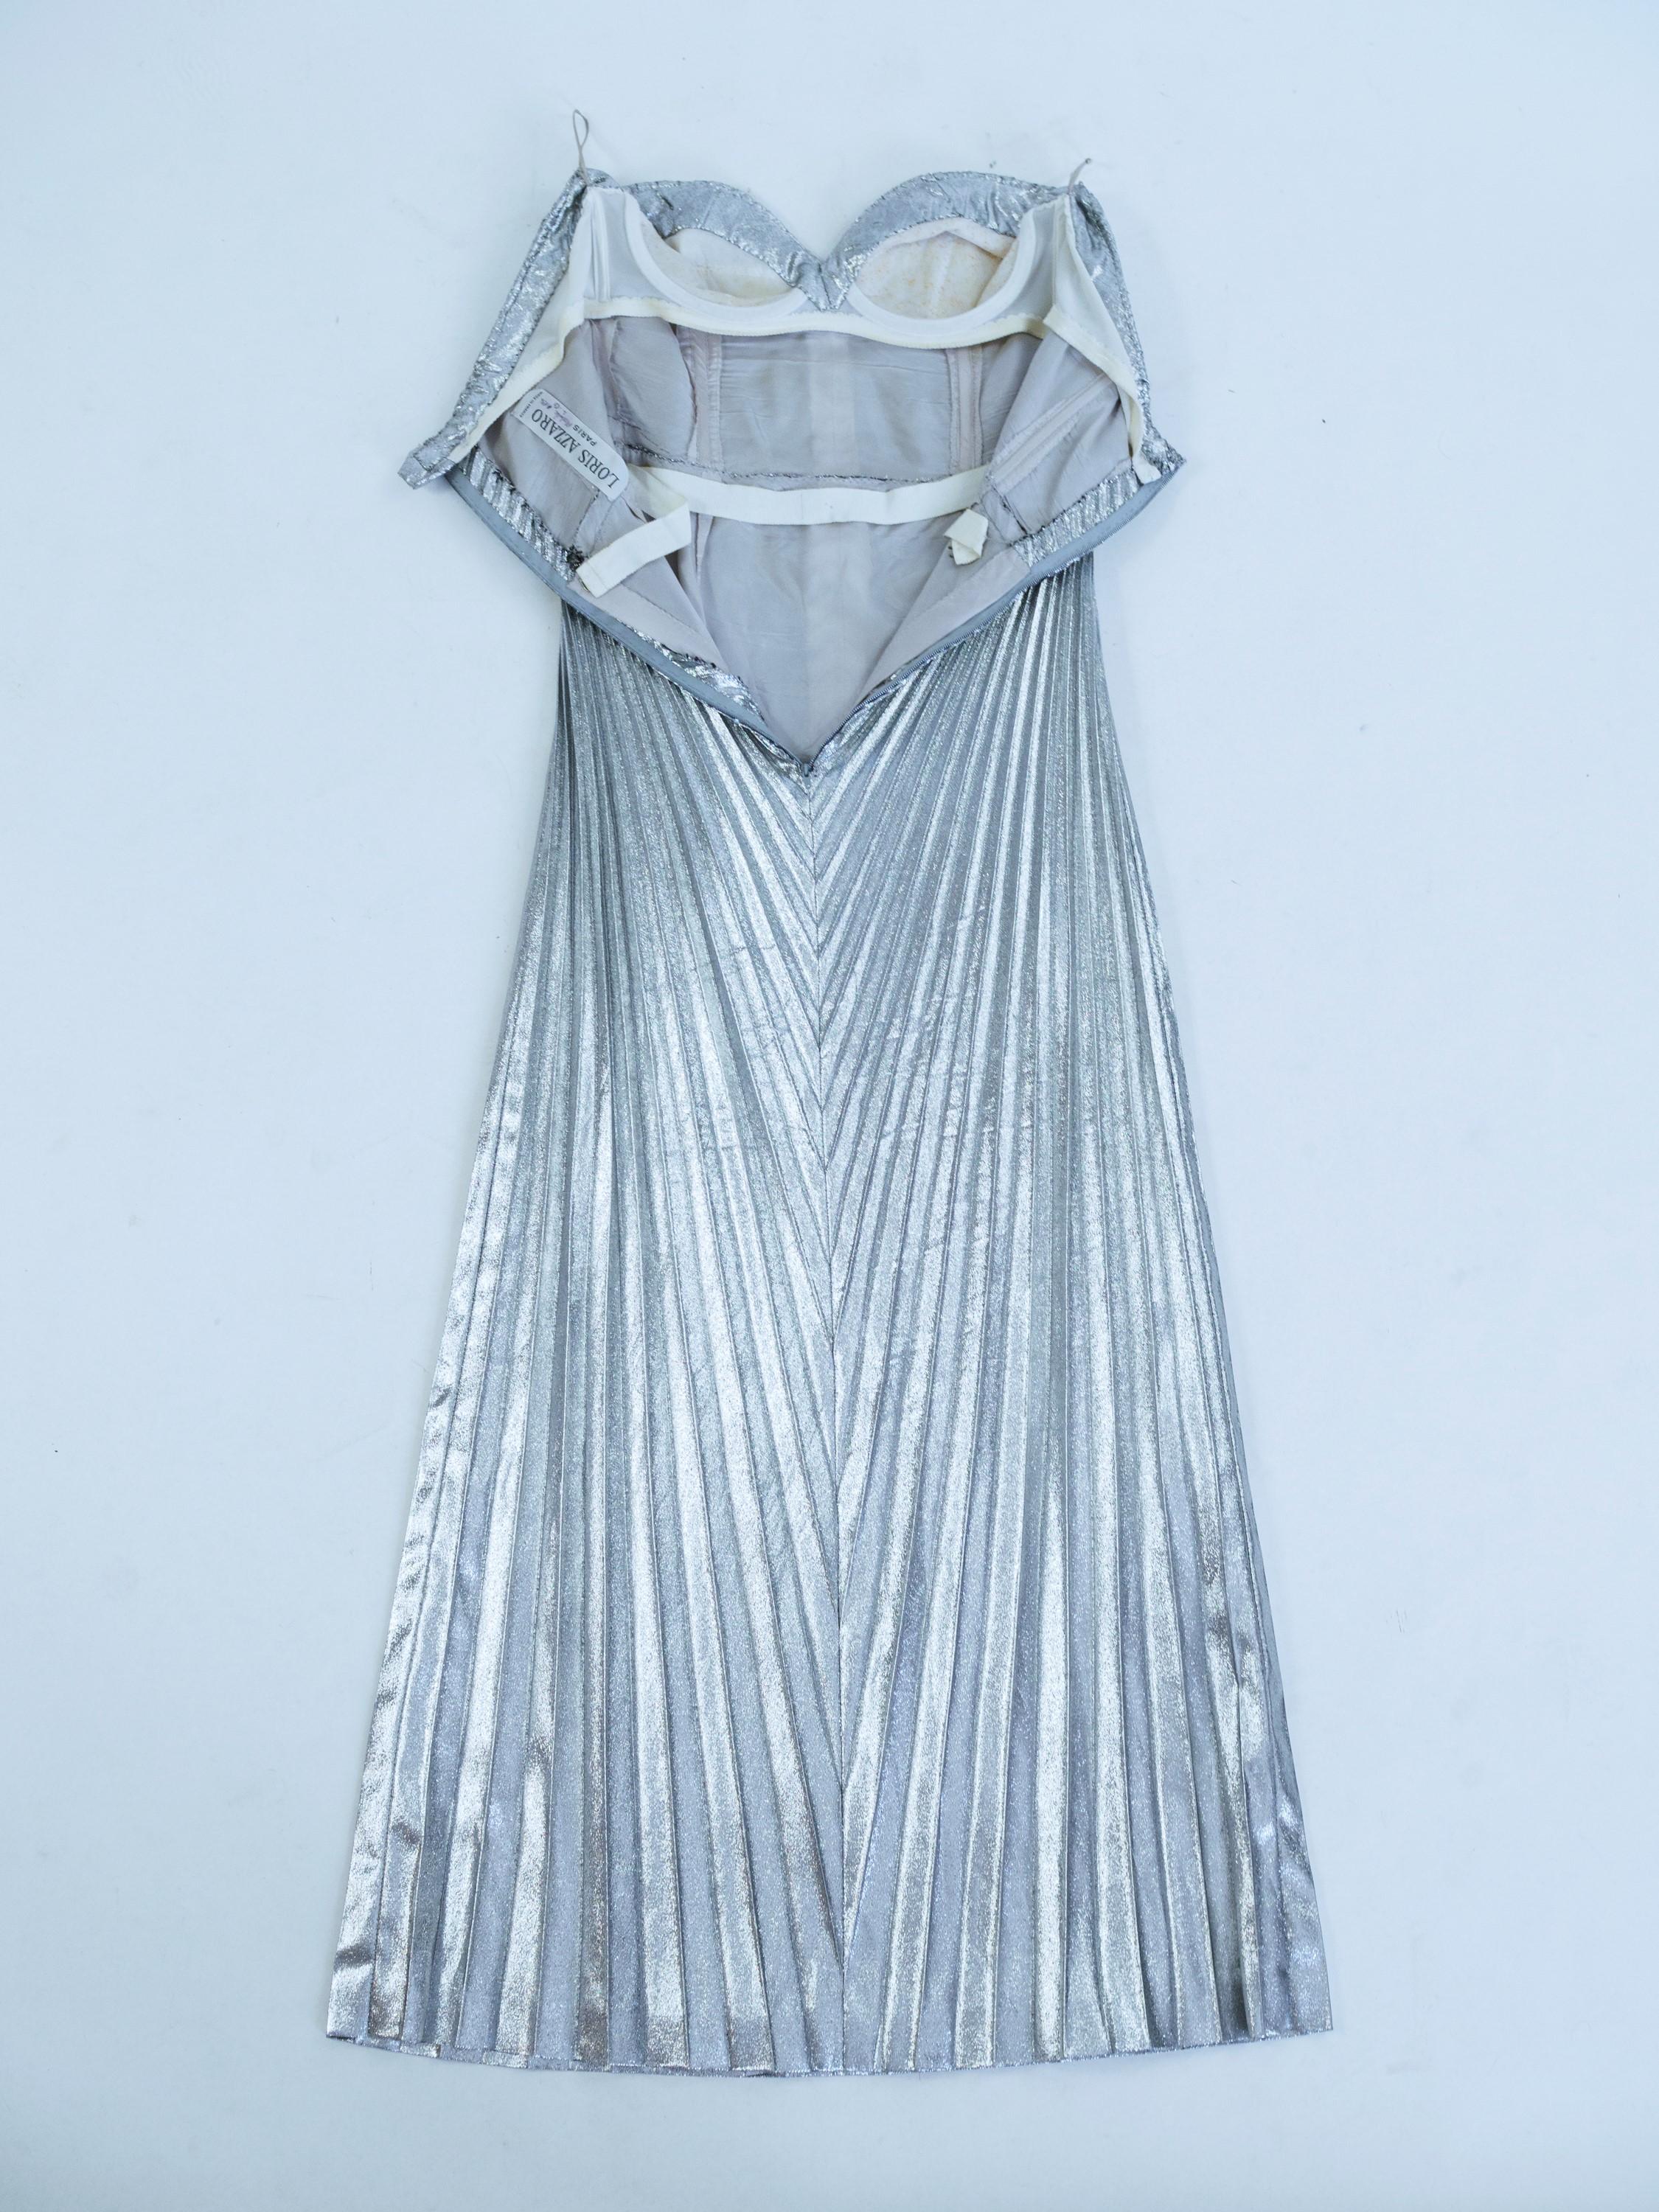 Loris Azzaro Haute Couture evening dress in silver lamé Circa 1980 1